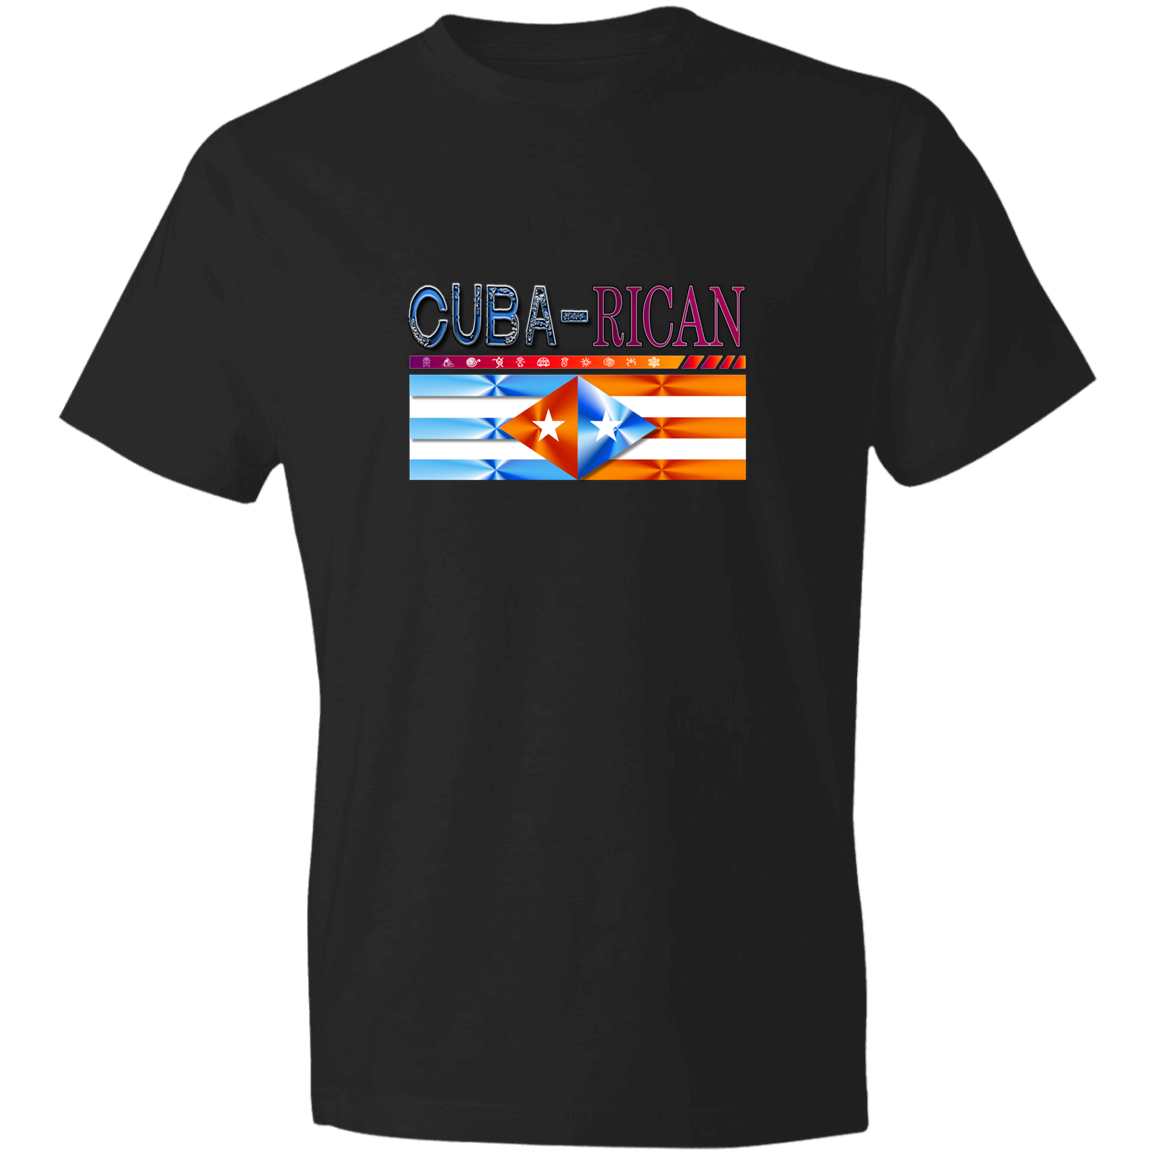 Cuba-Rican Lightweight T-Shirt 4.5 oz - Puerto Rican Pride